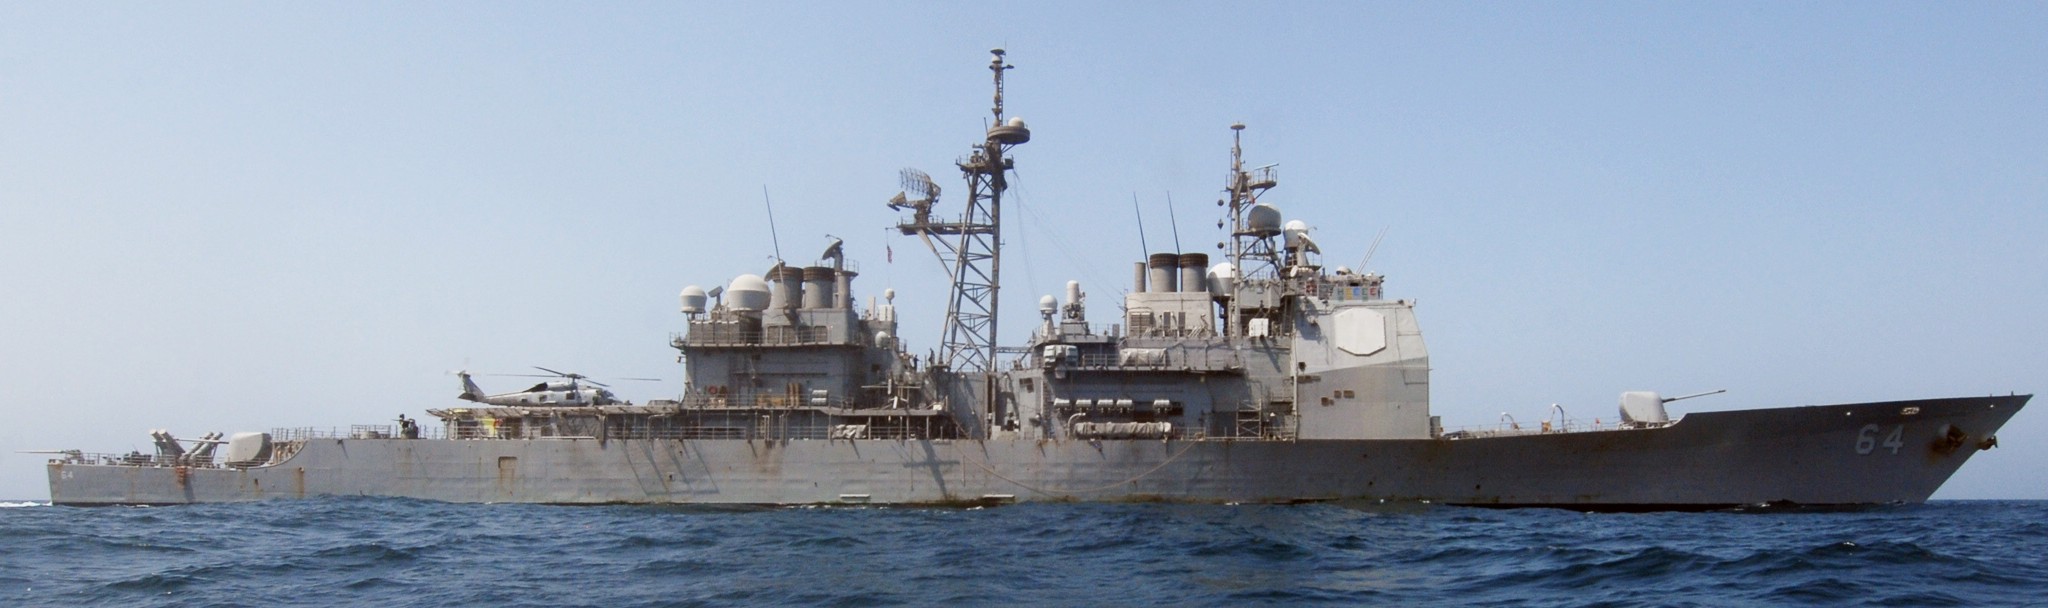 cg-64 uss gettysburg ticonderoga class guided missile cruiser aegis us navy arabian sea 49